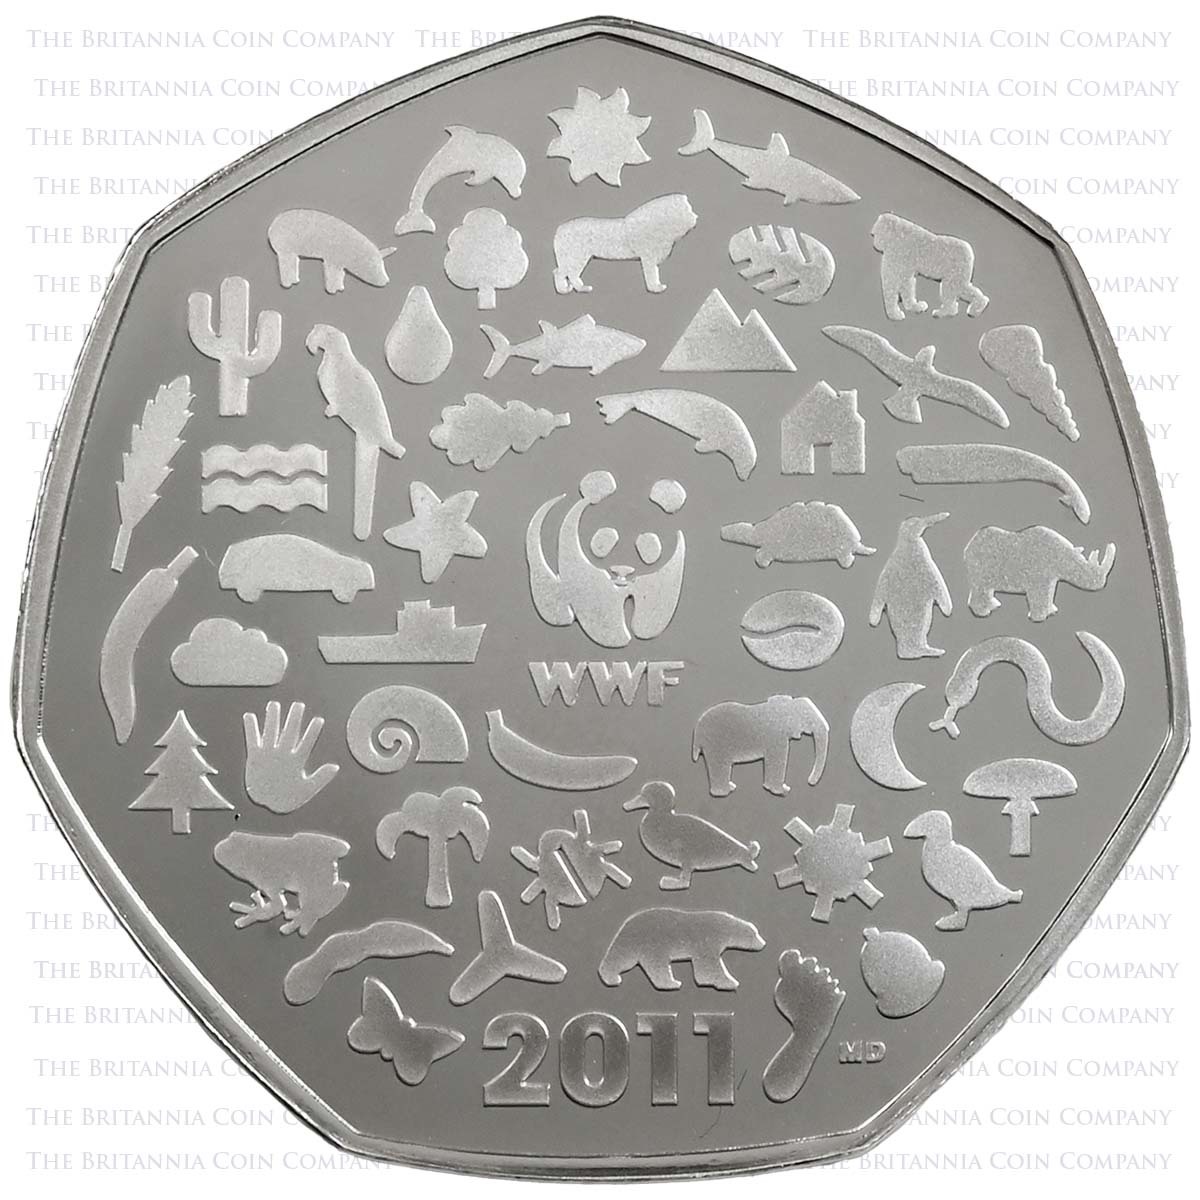 UKWWFSP 2011 WWF World Wildlife Fund 50p Silver Proof Reverse